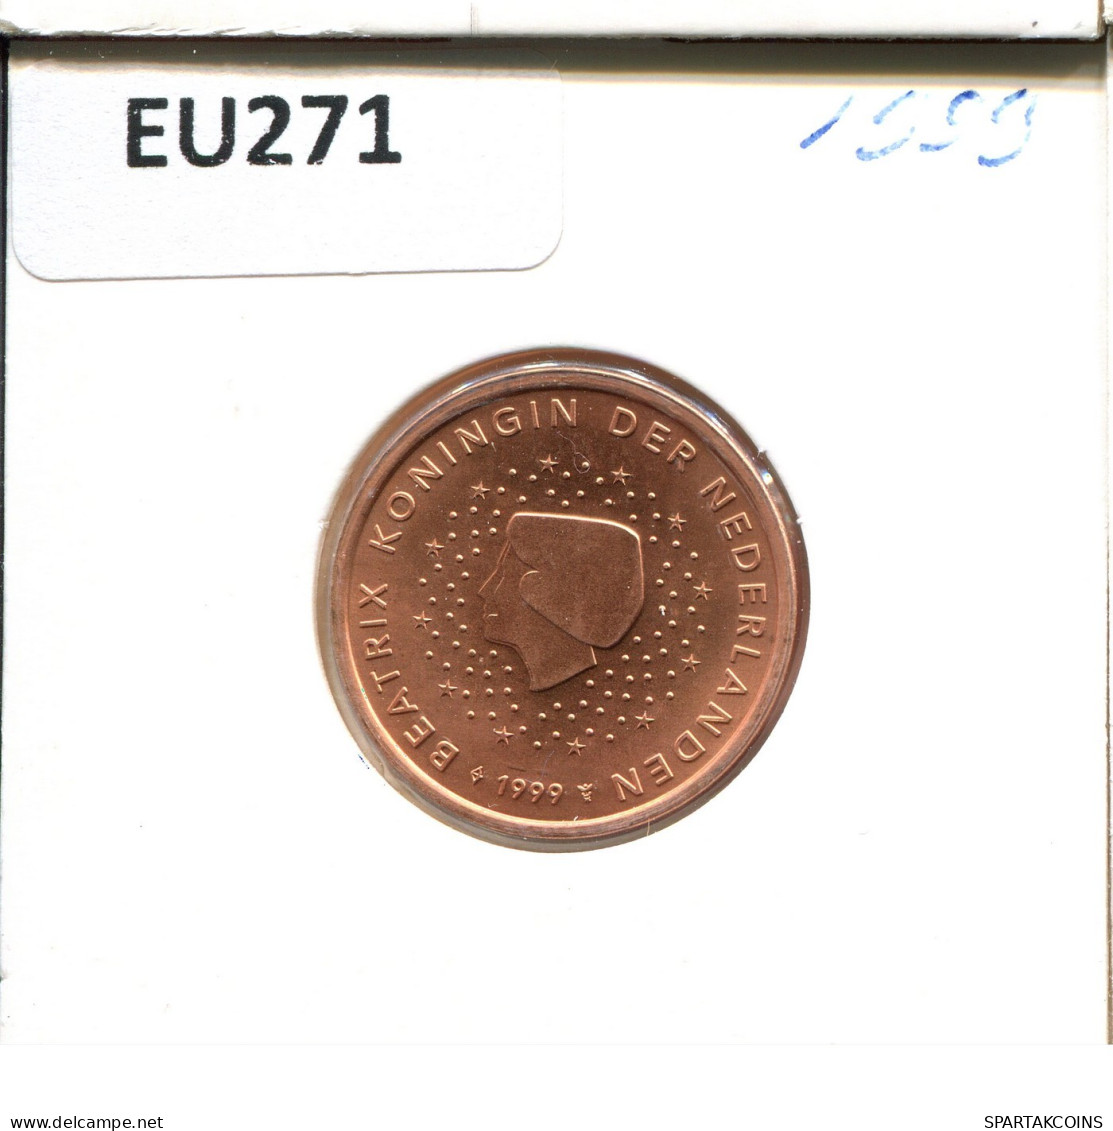 5 EURO CENTS 1999 NIEDERLANDE NETHERLANDS Münze #EU271.D.A - Pays-Bas